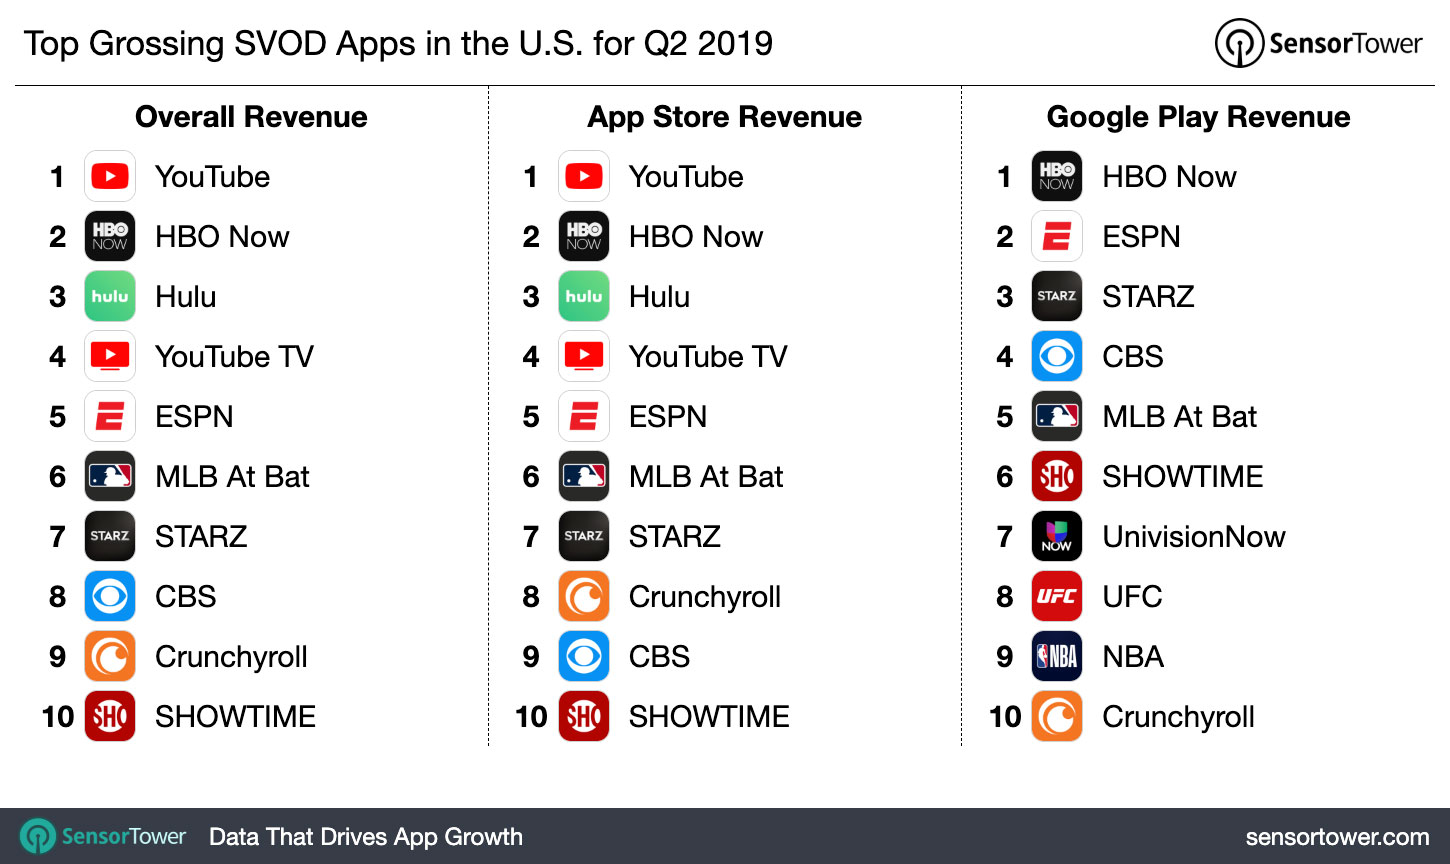 Top Grossing SVOD Apps in the U.S